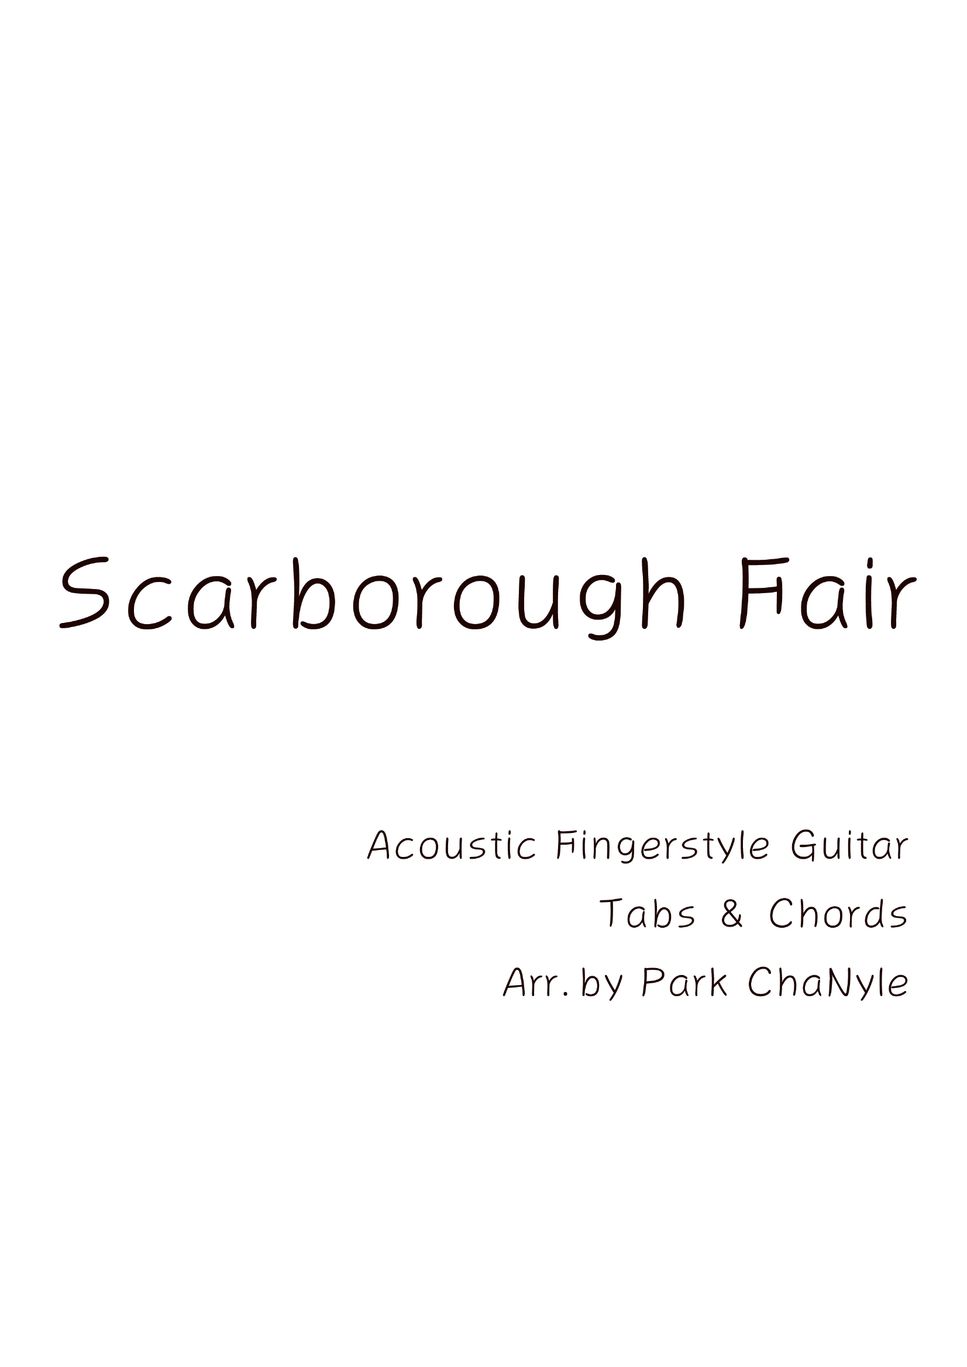 Simon & Garfunkel - Scarborough Fair (Acoustic Fingerstyle Guitar) by Park ChaNyle